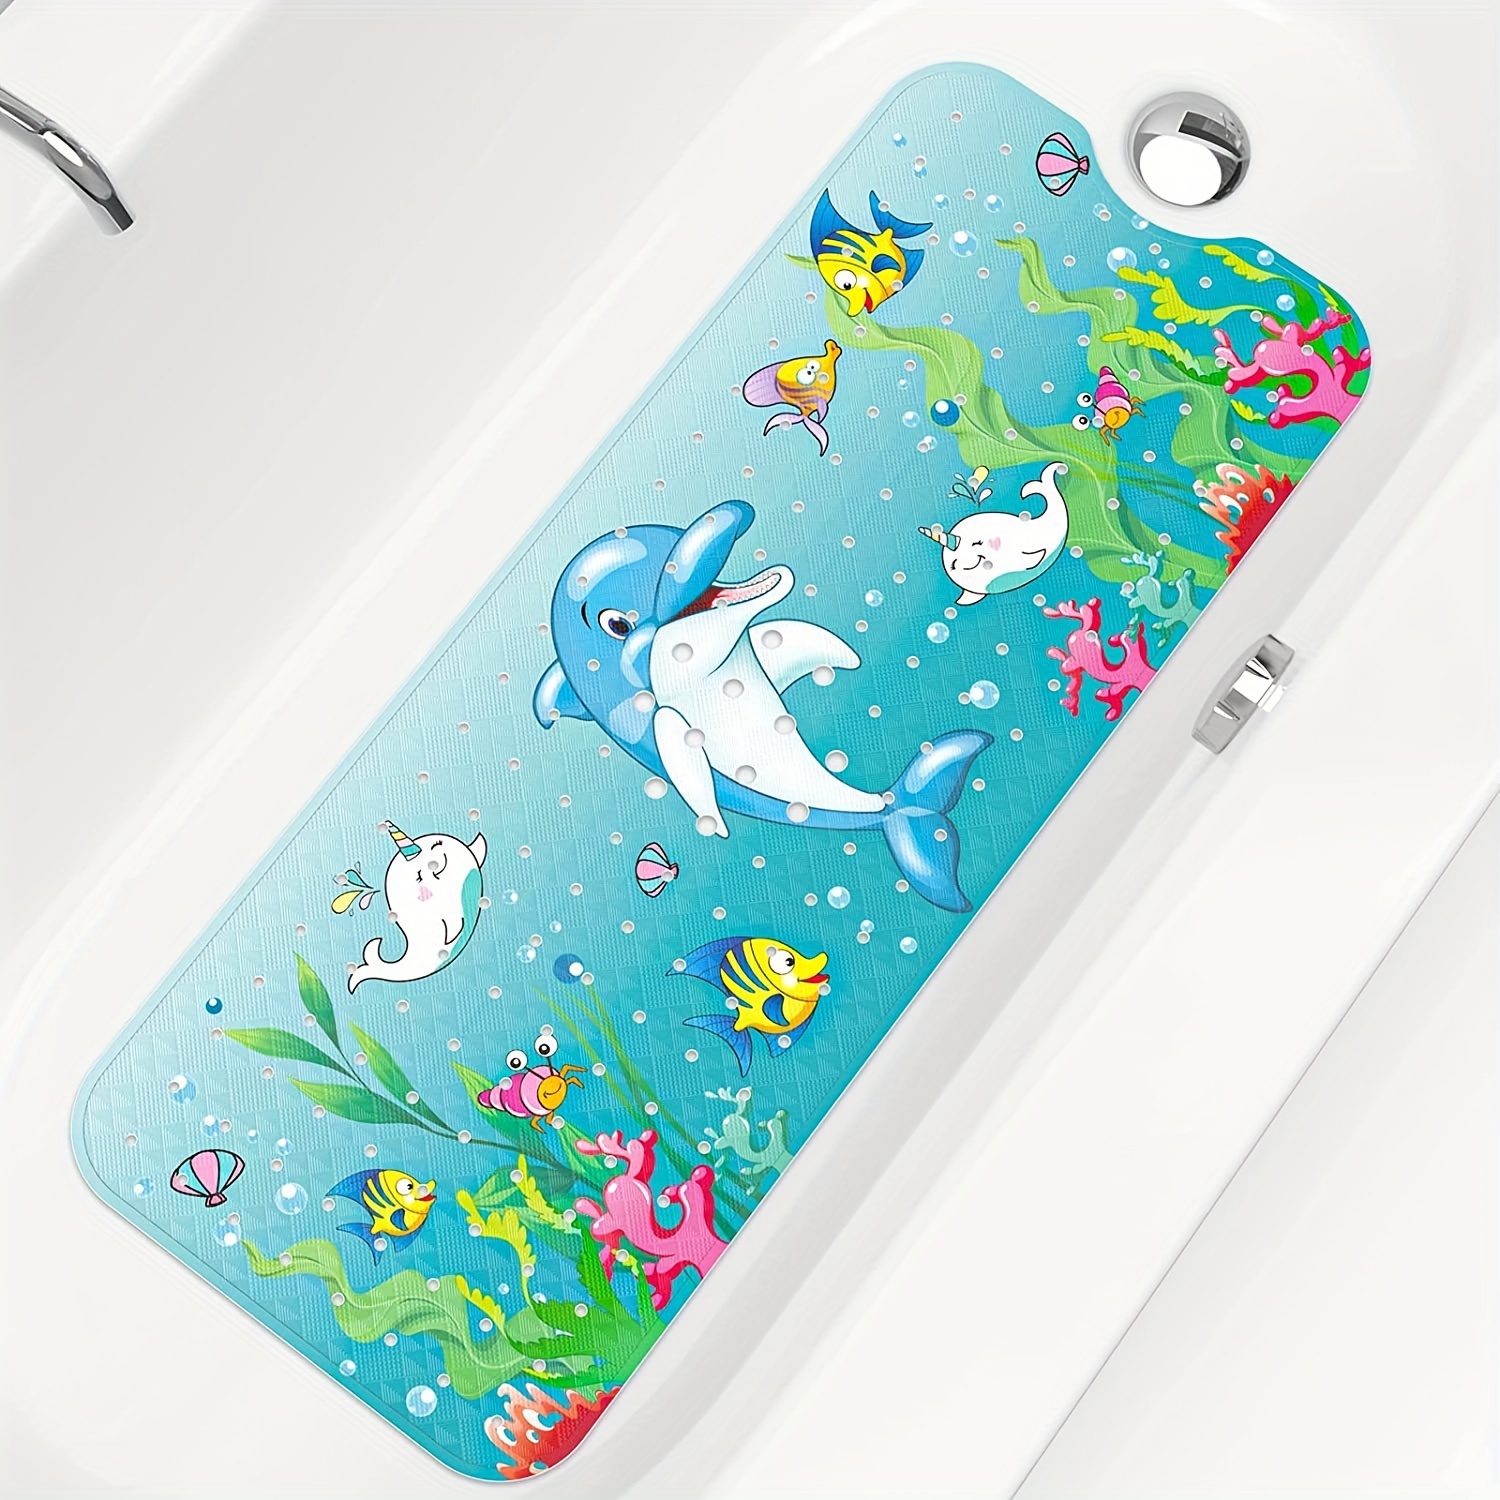 Tapetes de baño antideslizantes de dibujos animados para niños, bonito  patrón ovalado de 27 x 15 pulgadas, tapete de ducha para bañera